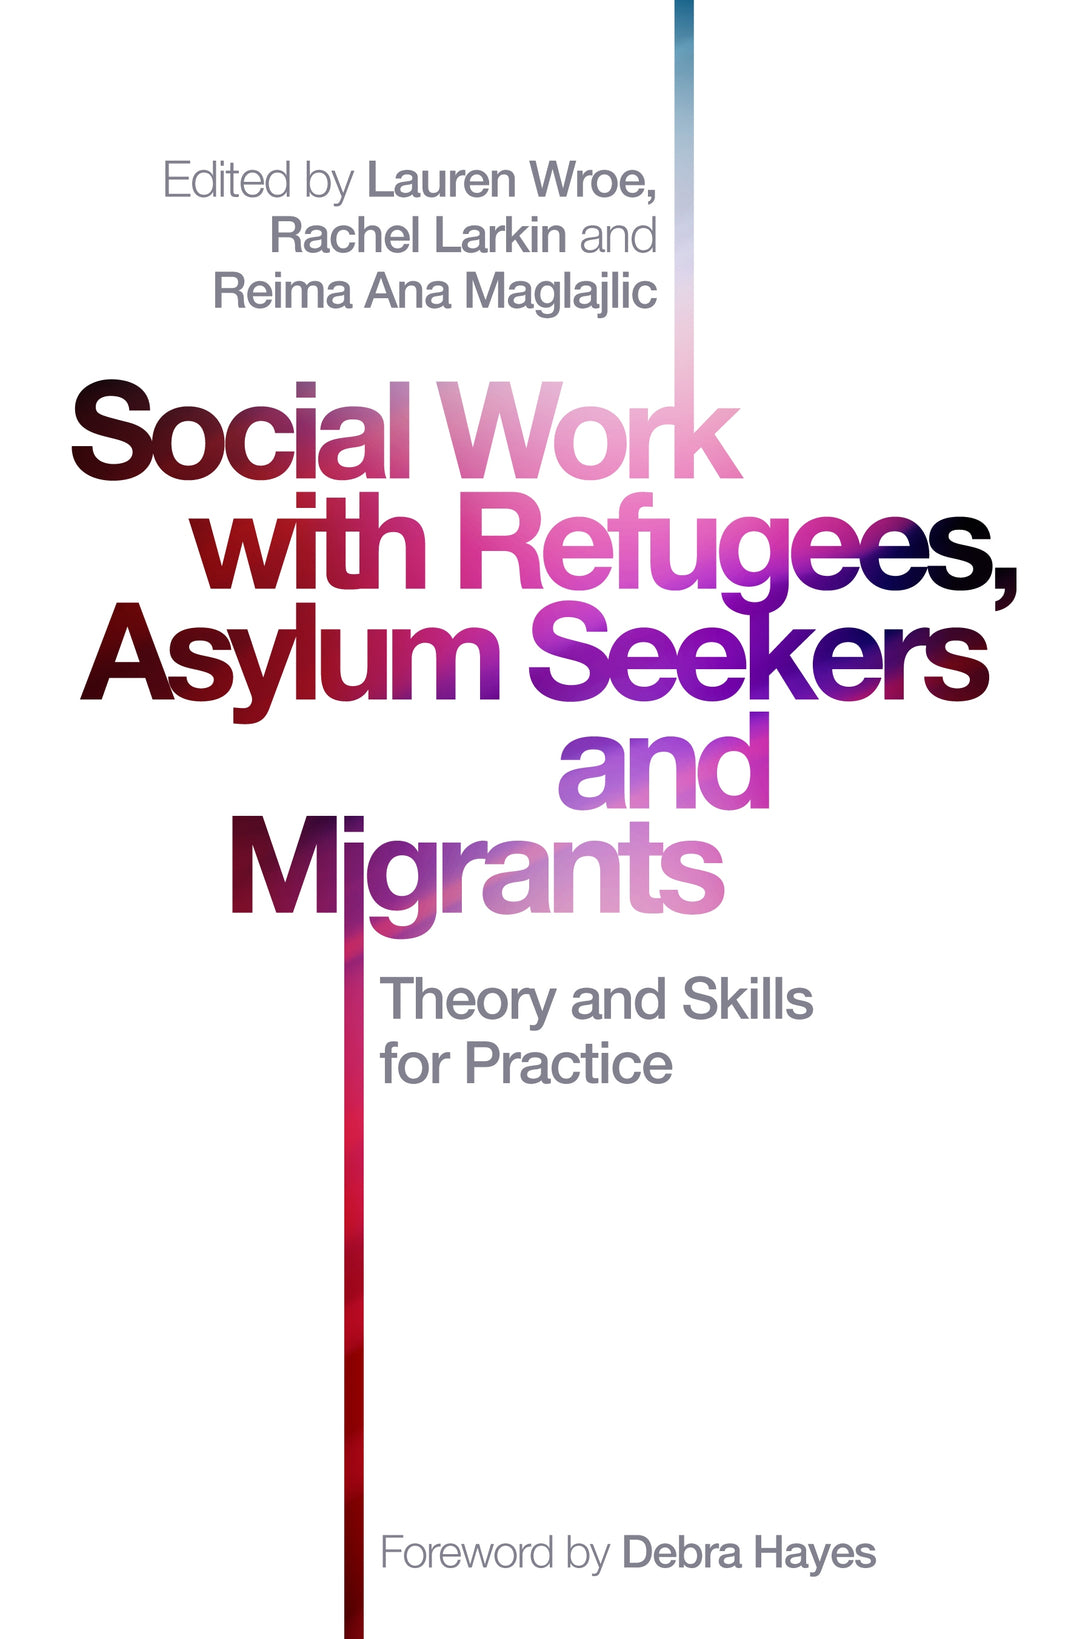 Social Work with Refugees, Asylum Seekers and Migrants by Rachel Larkin, Lauren Wroe, Reima Ana Maglajlic, No Author Listed, Debra Hayes